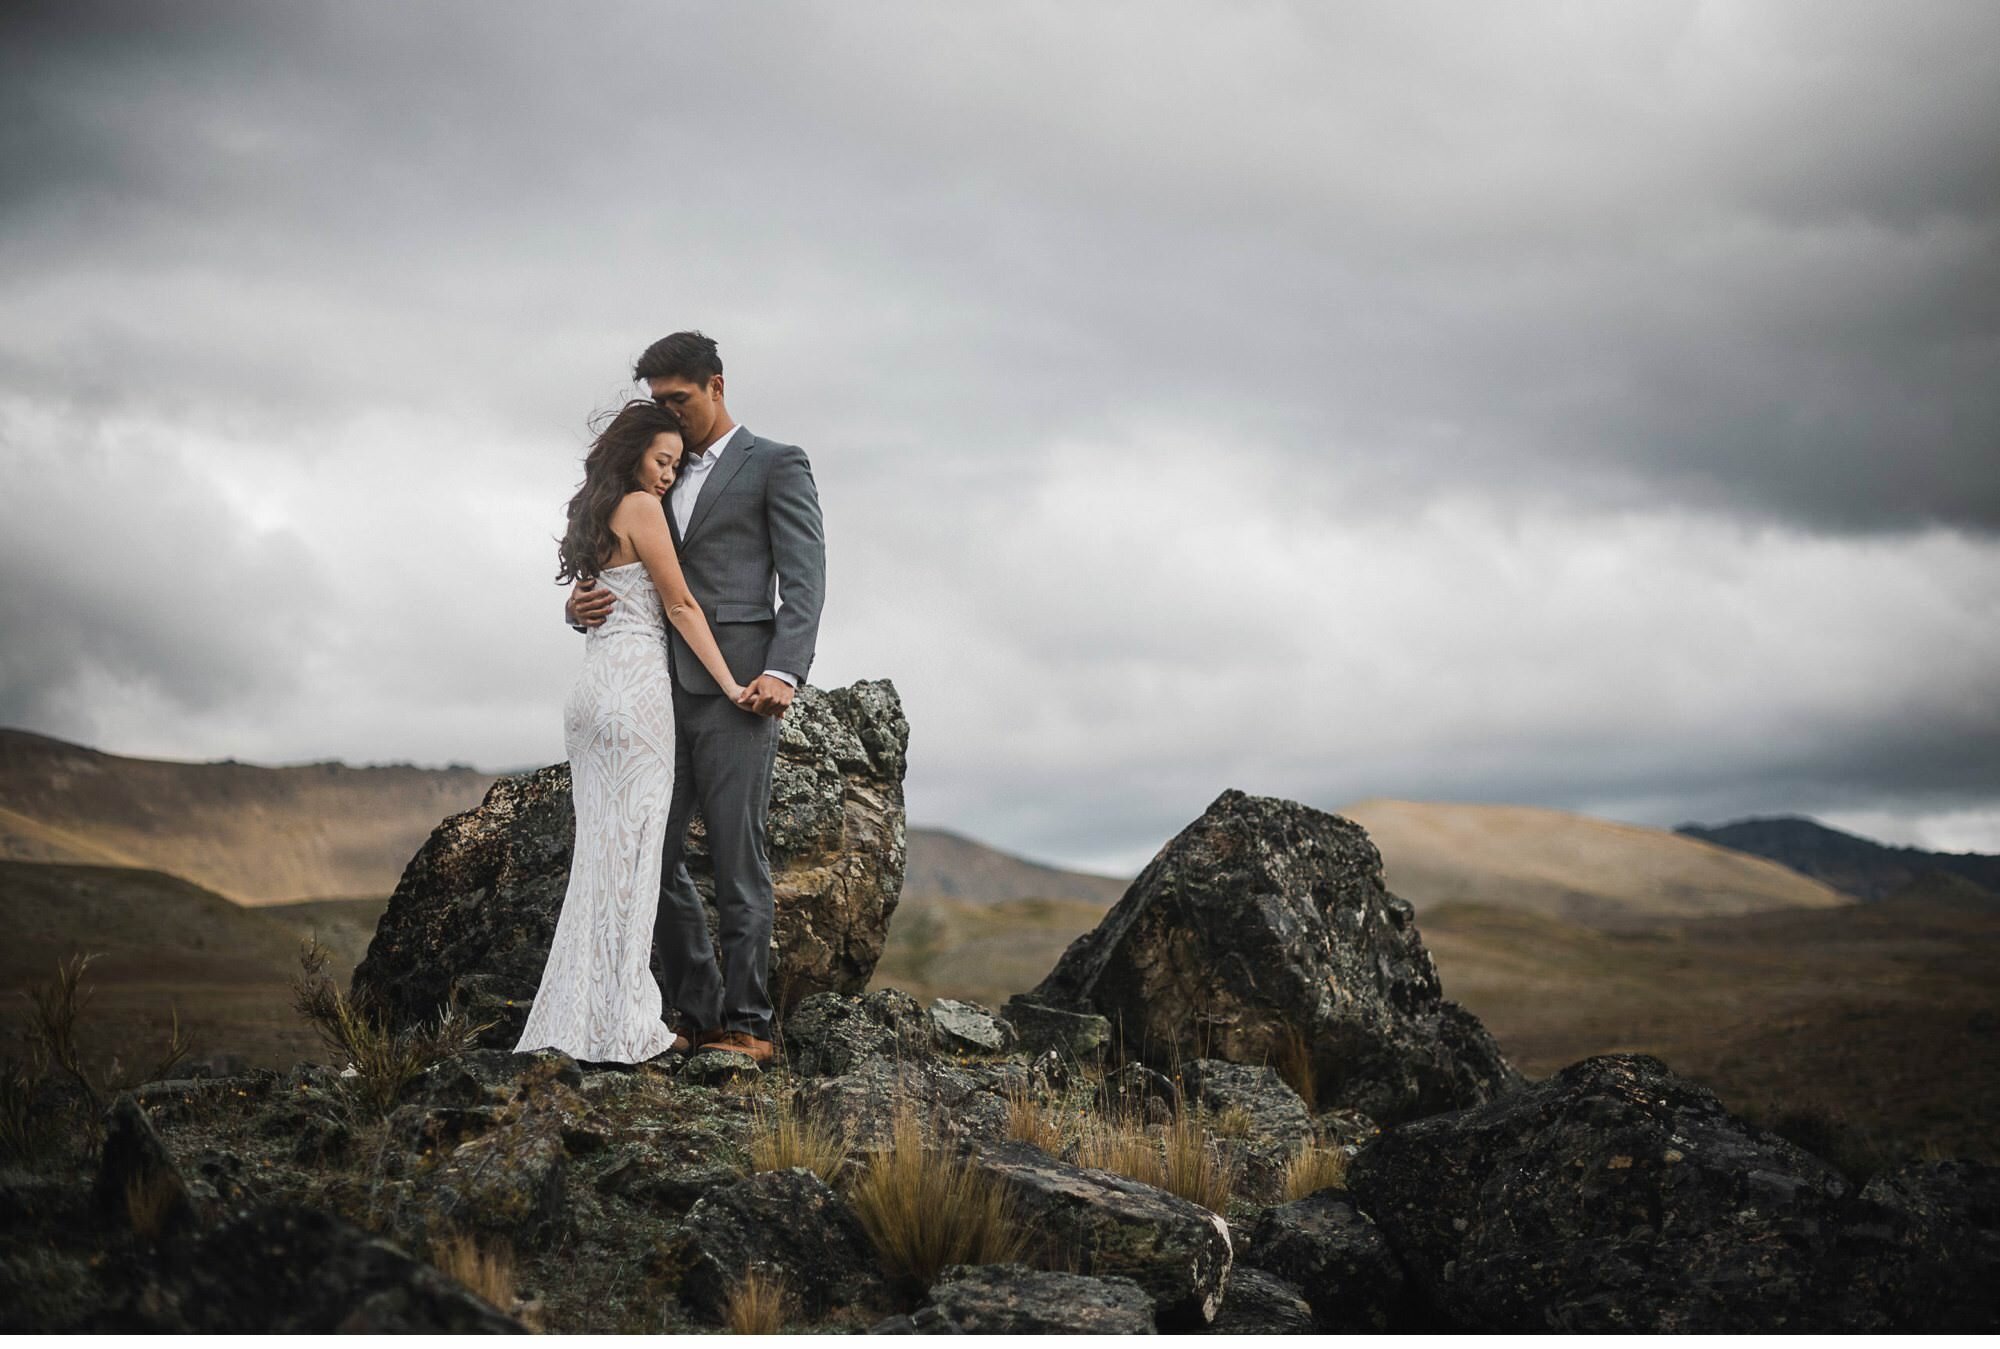 059 - New Zealand Wedding Photography Highlights.jpg